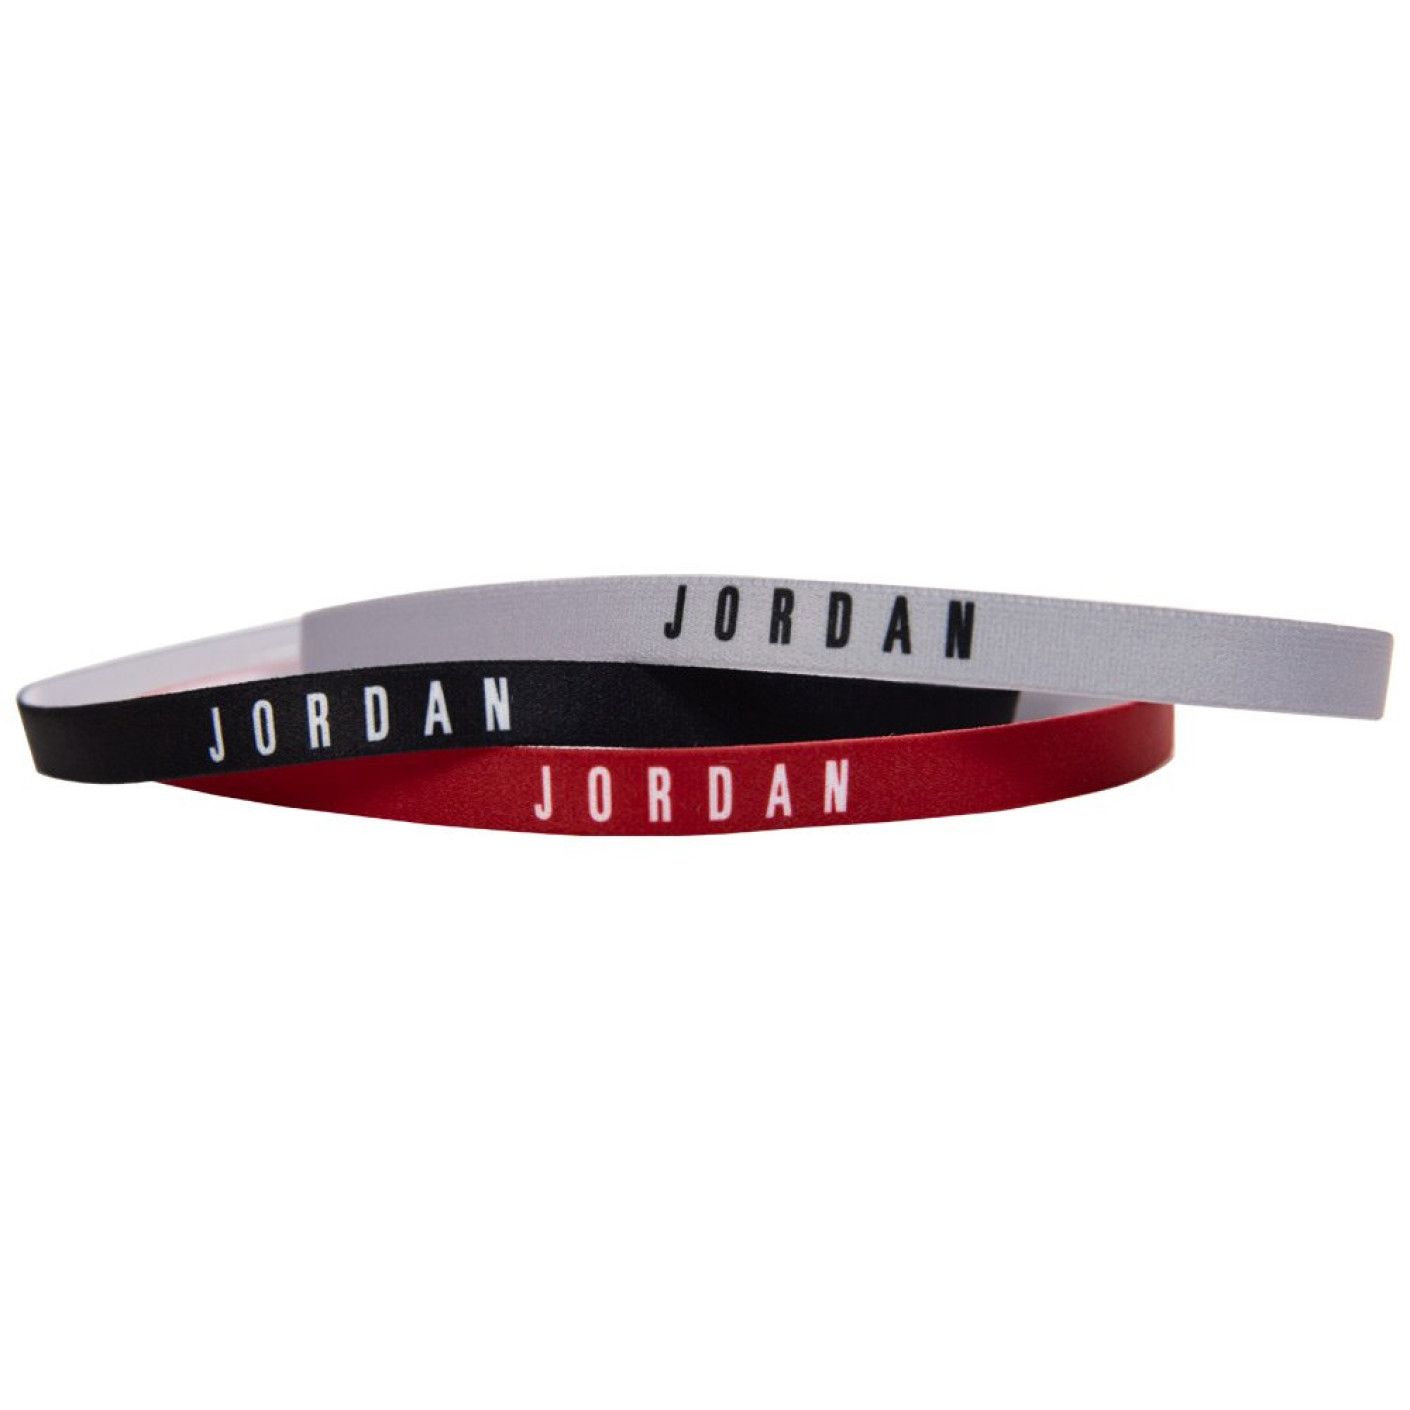 Headbands Jordan.